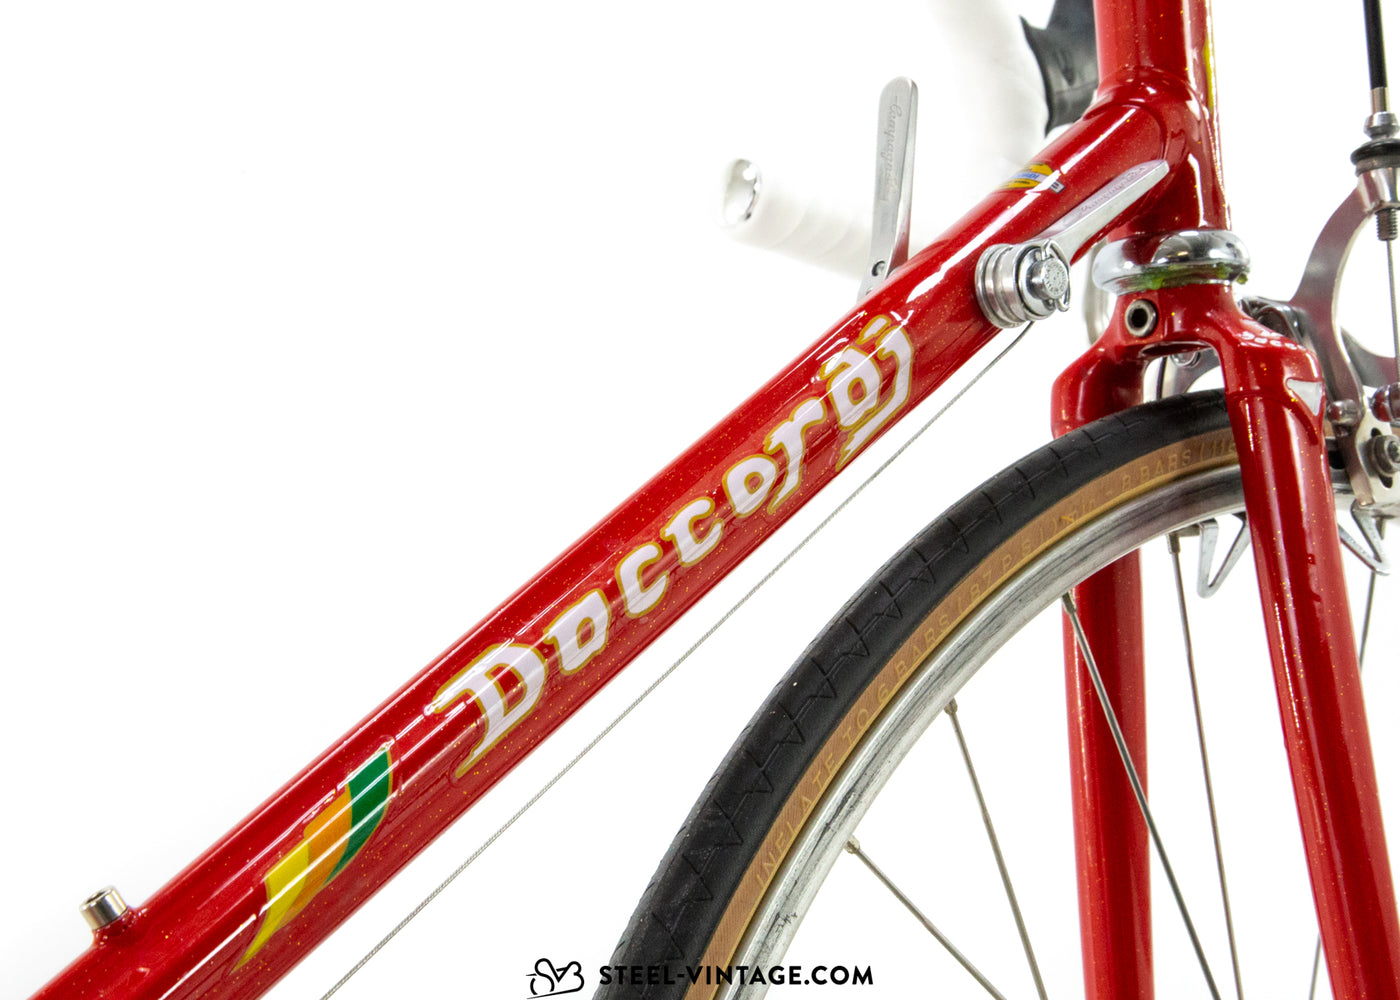 Daccordi Designer Road Bicycle 1980s